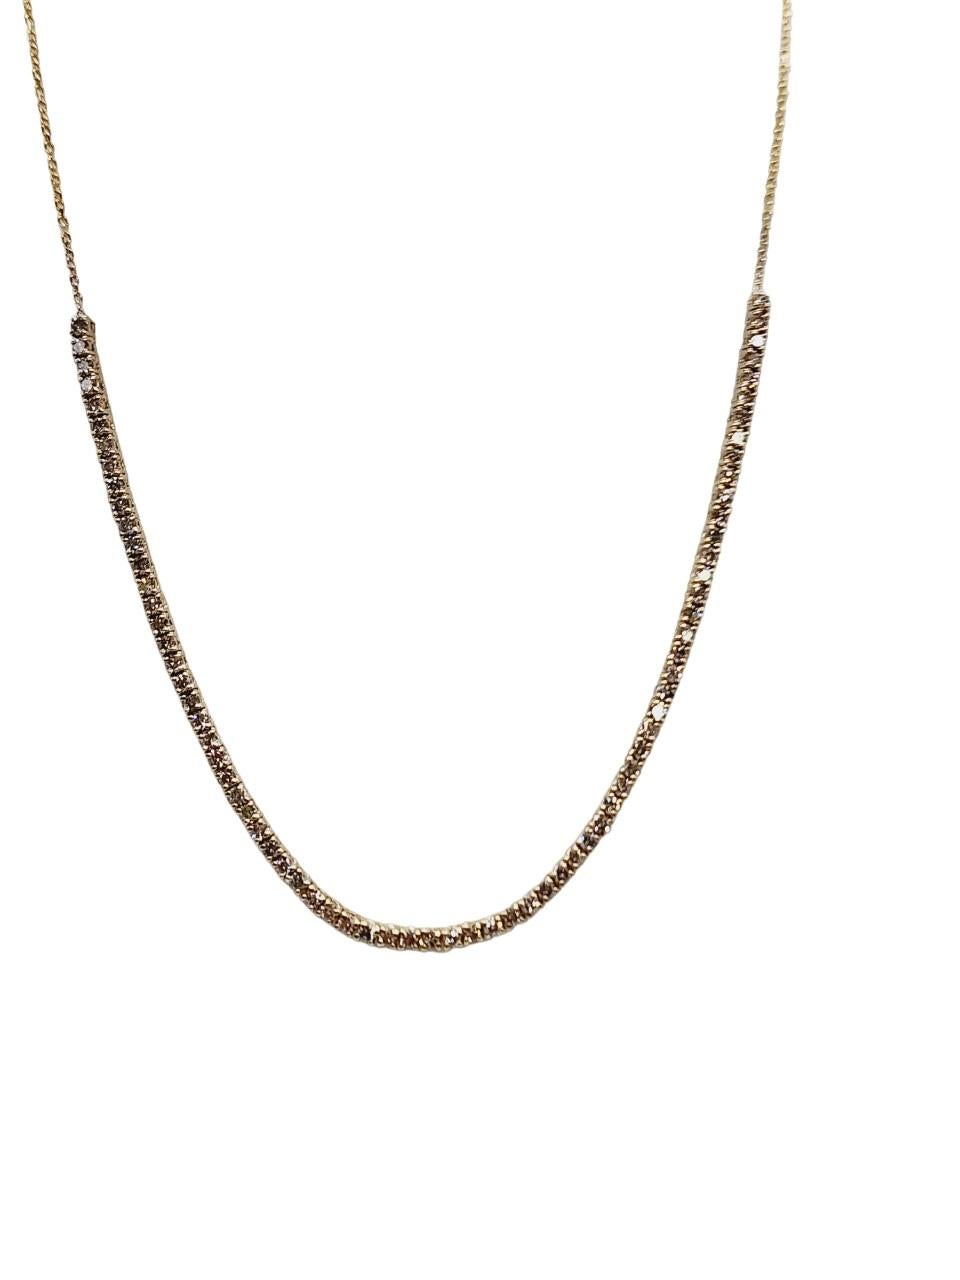 Round Cut 1.65 Carat Mini Diamond Necklace Chain 14 Karat Yellow Gold 18'' For Sale